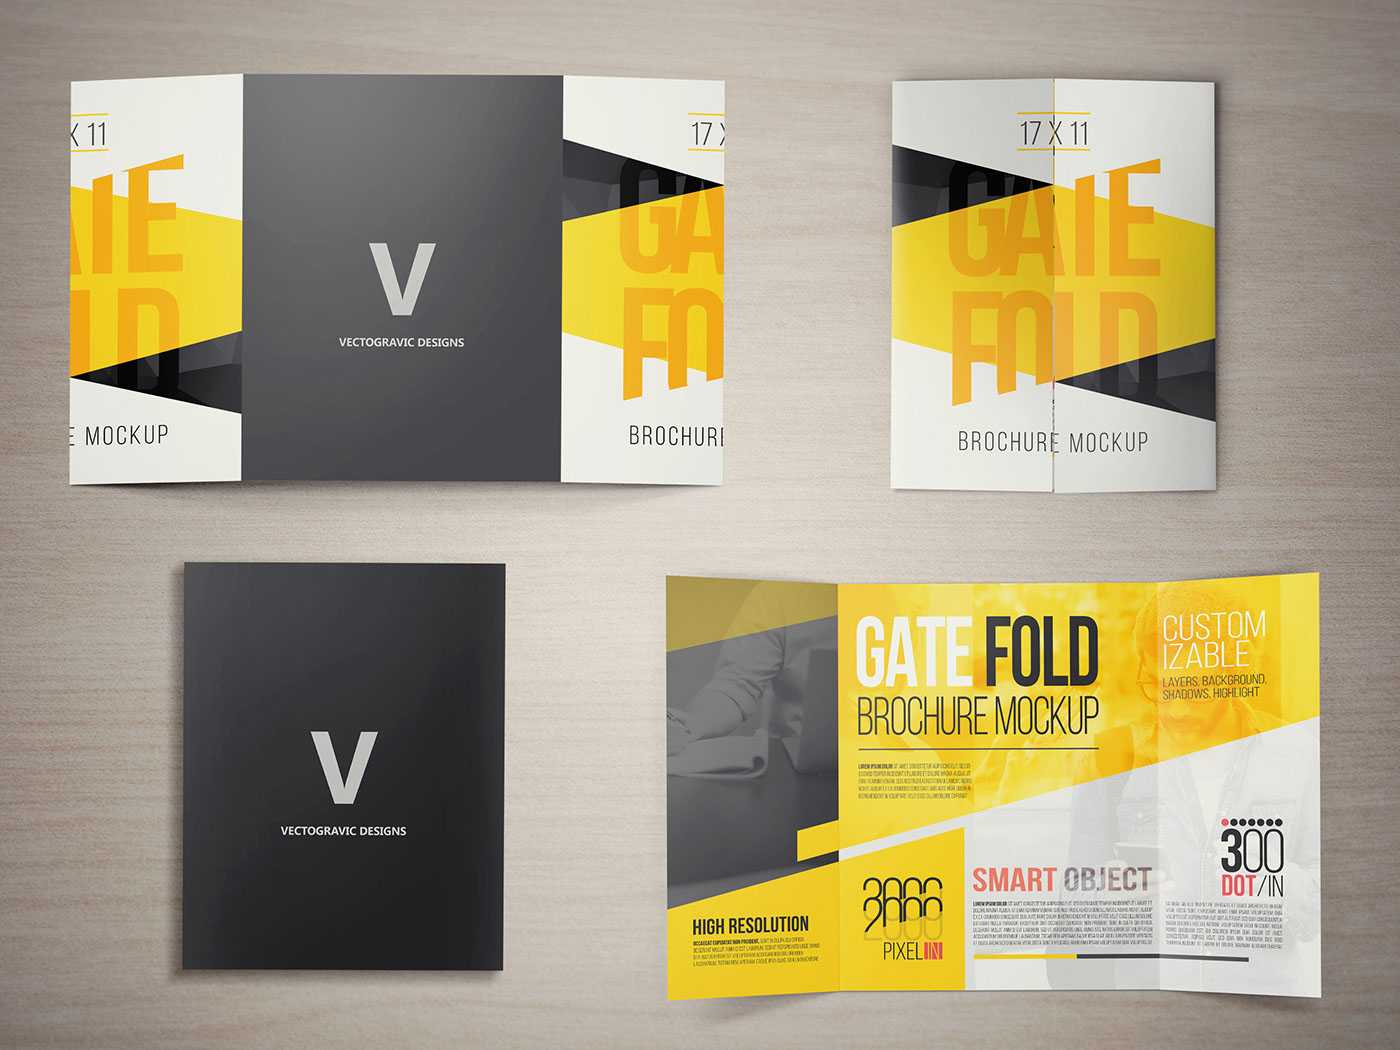 17 X 11 Gate Fold Brochure Mockup On Behance Throughout Gate Fold Brochure Template